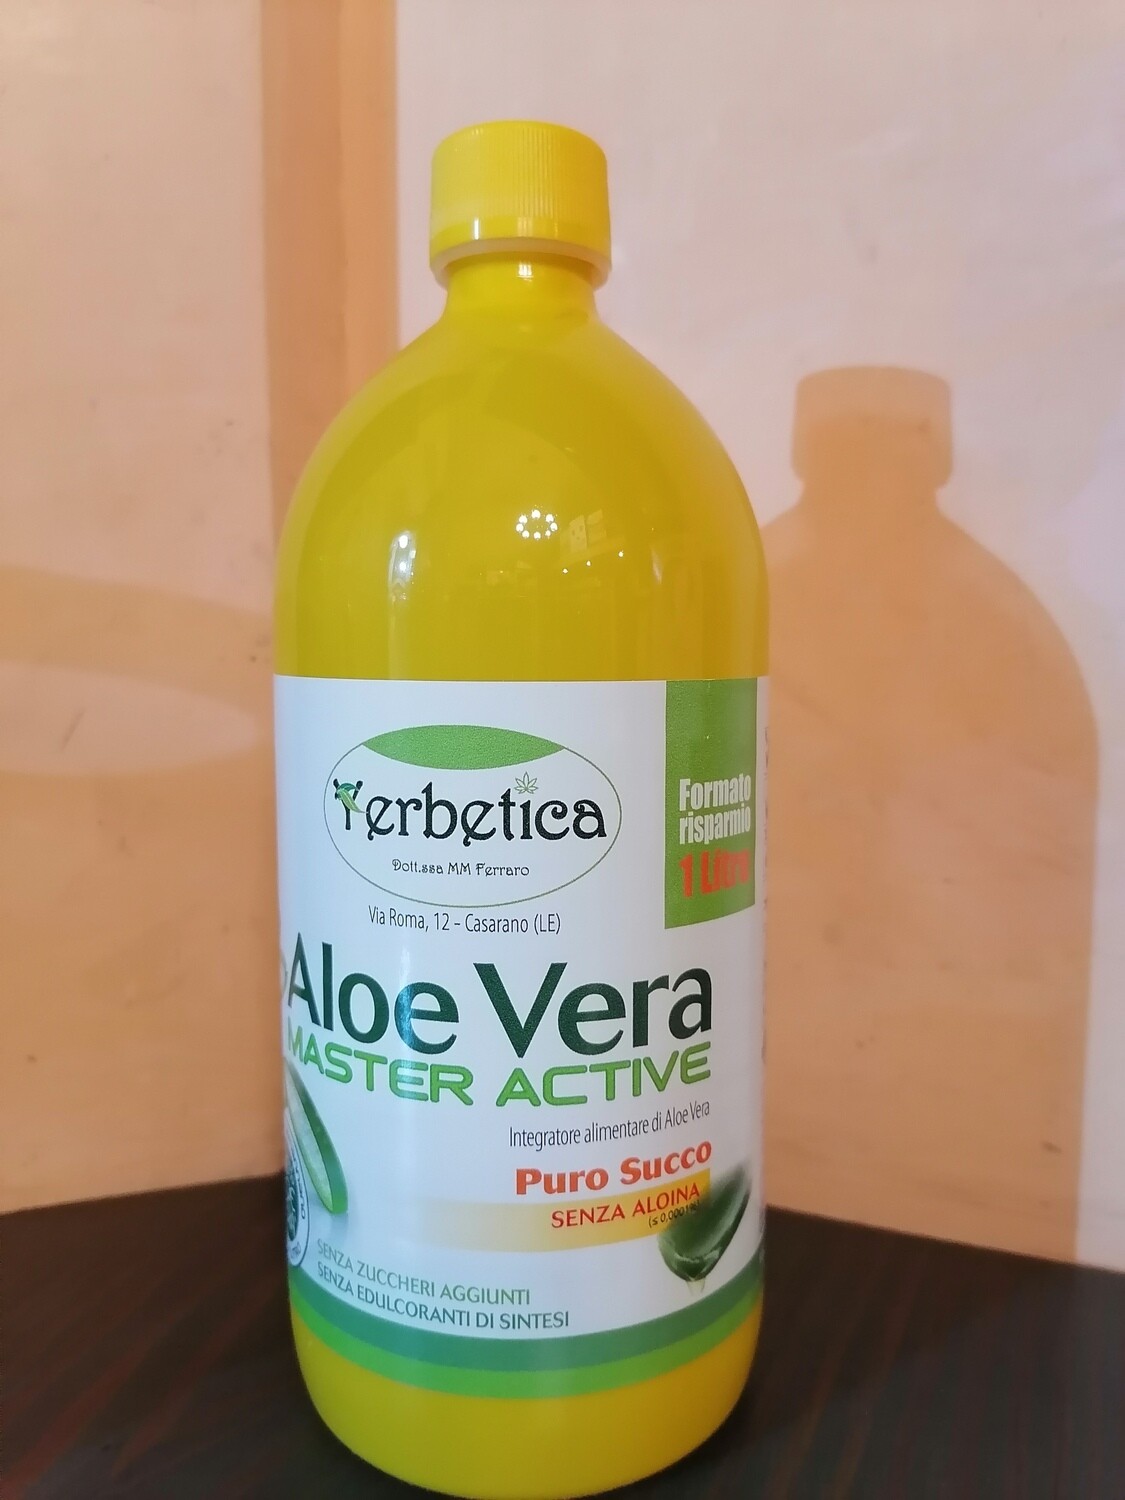 Aloe Vera MASTER ACTIVE – 100% Puro Succo 1 Lt | senza aloina | DETOX